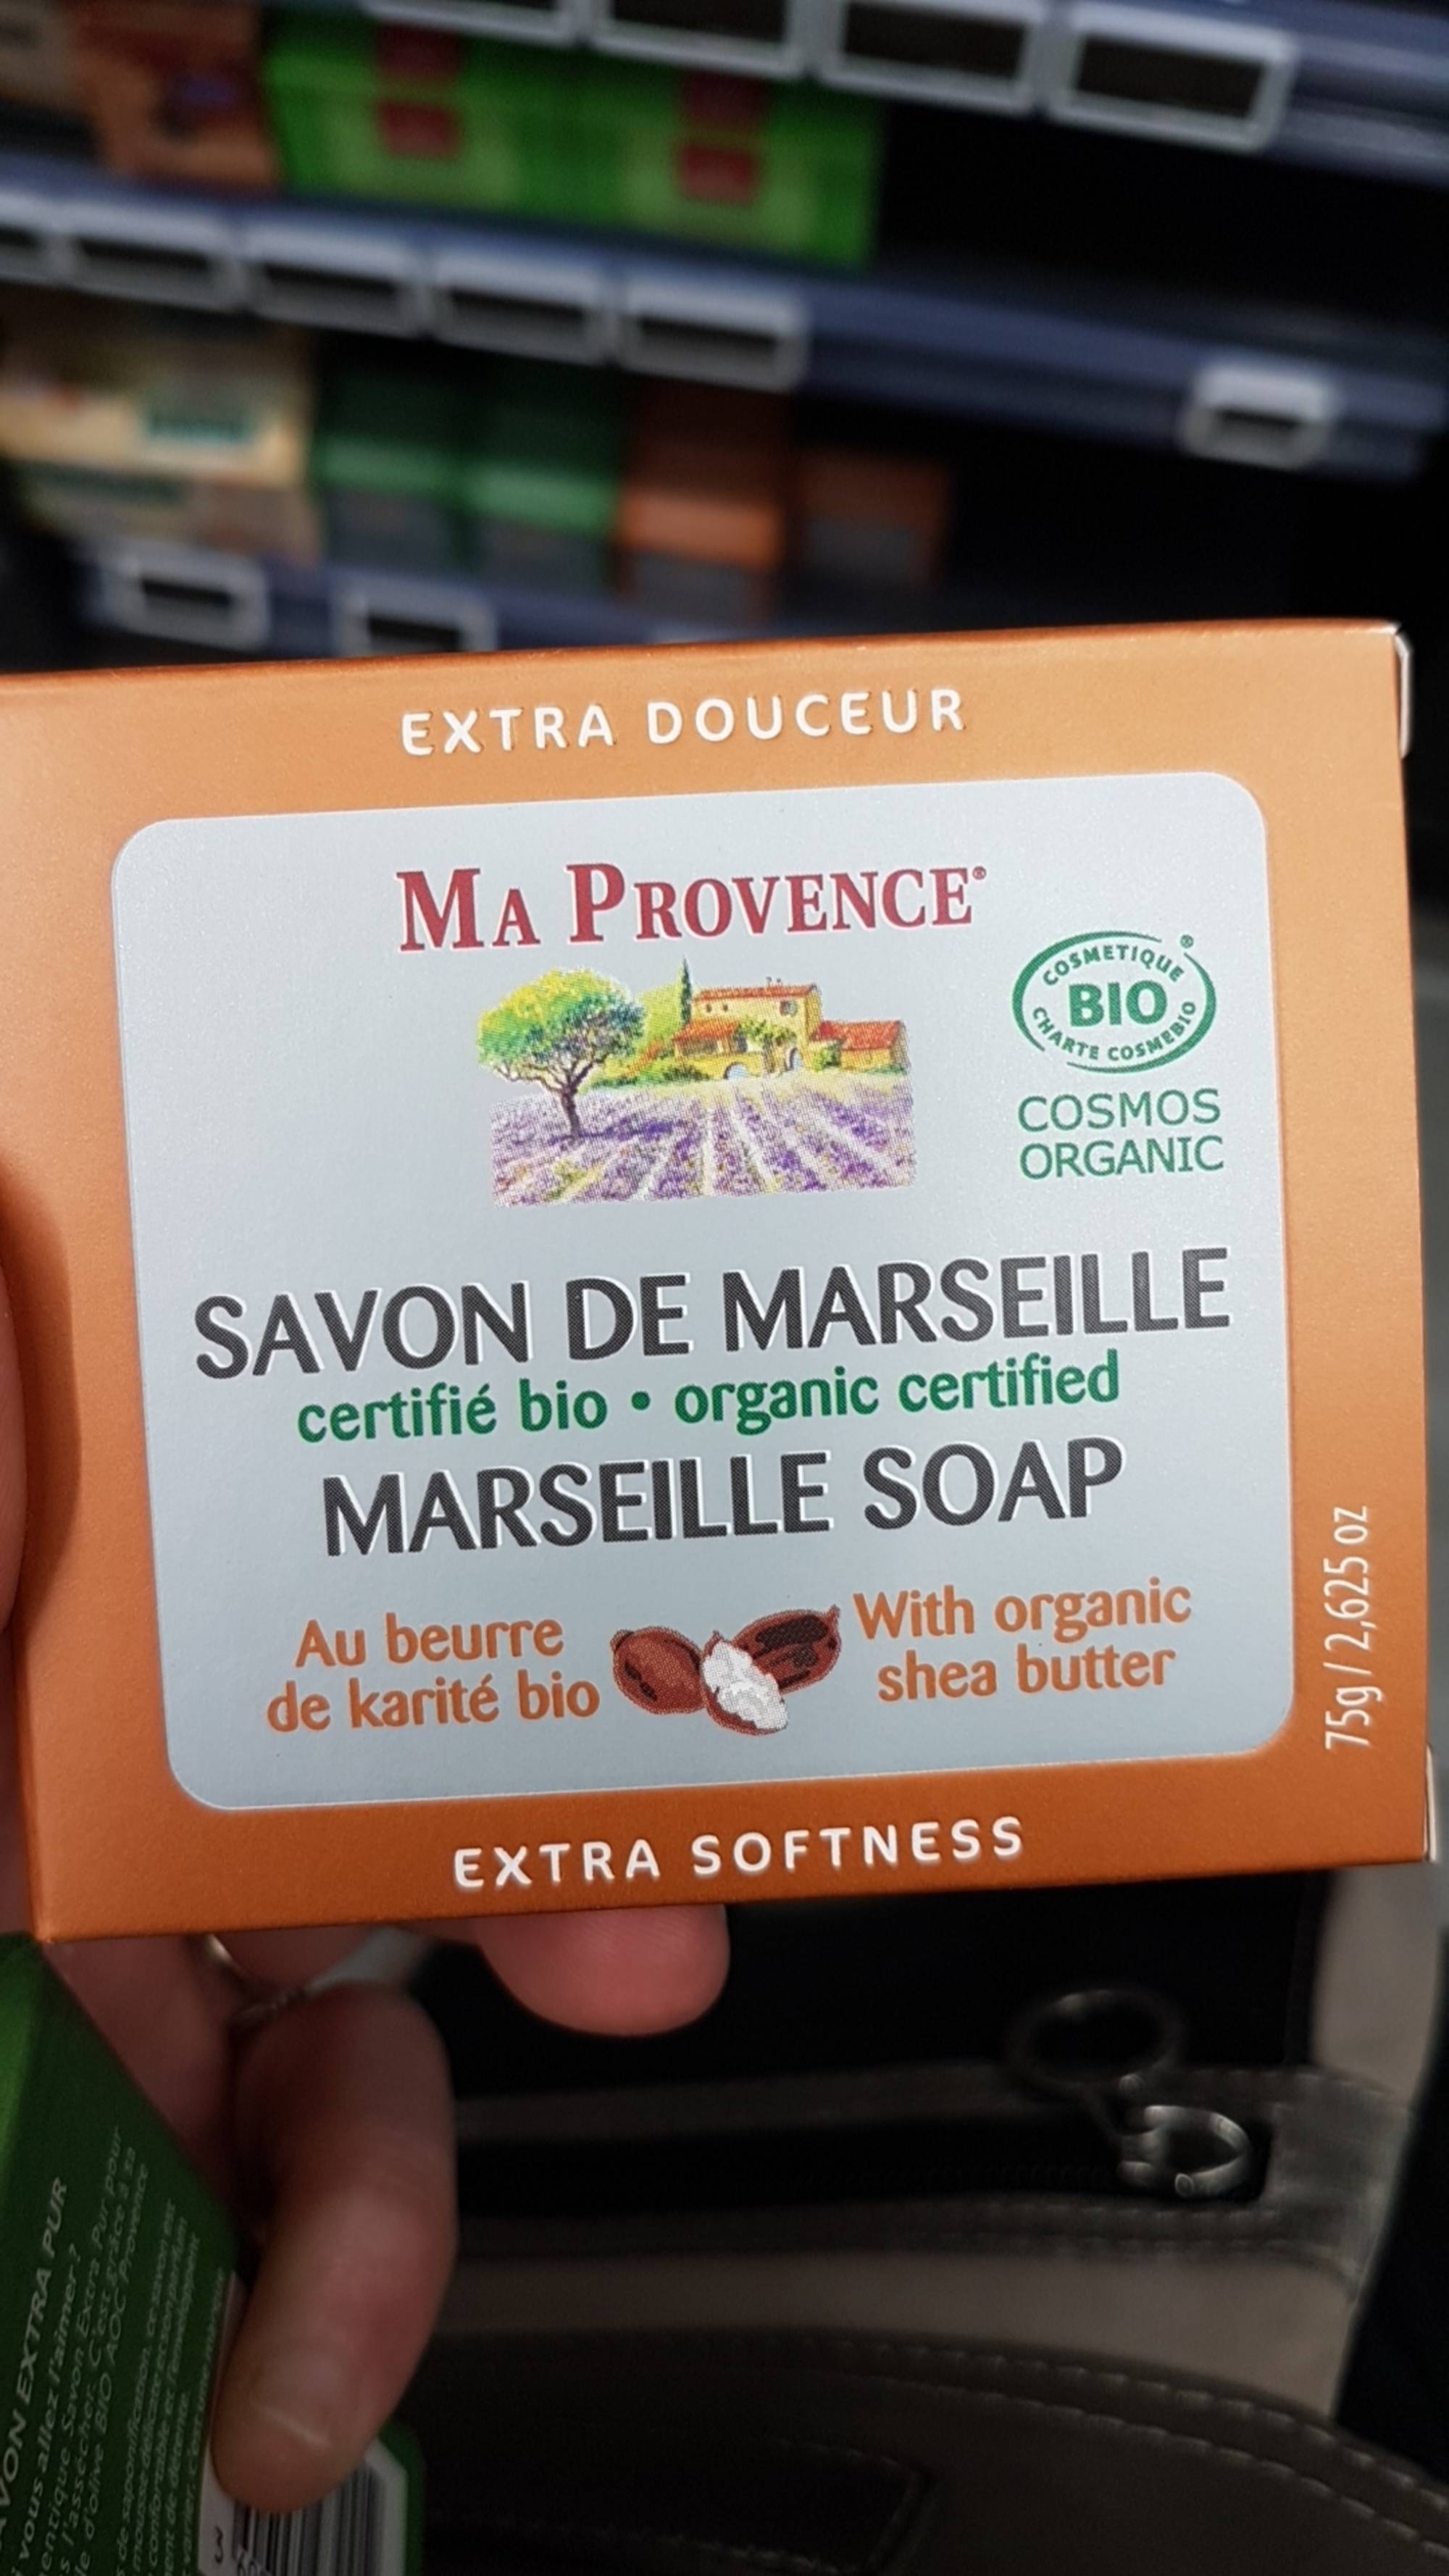 MA PROVENCE - Savon de Marseille au beurre de karité bio